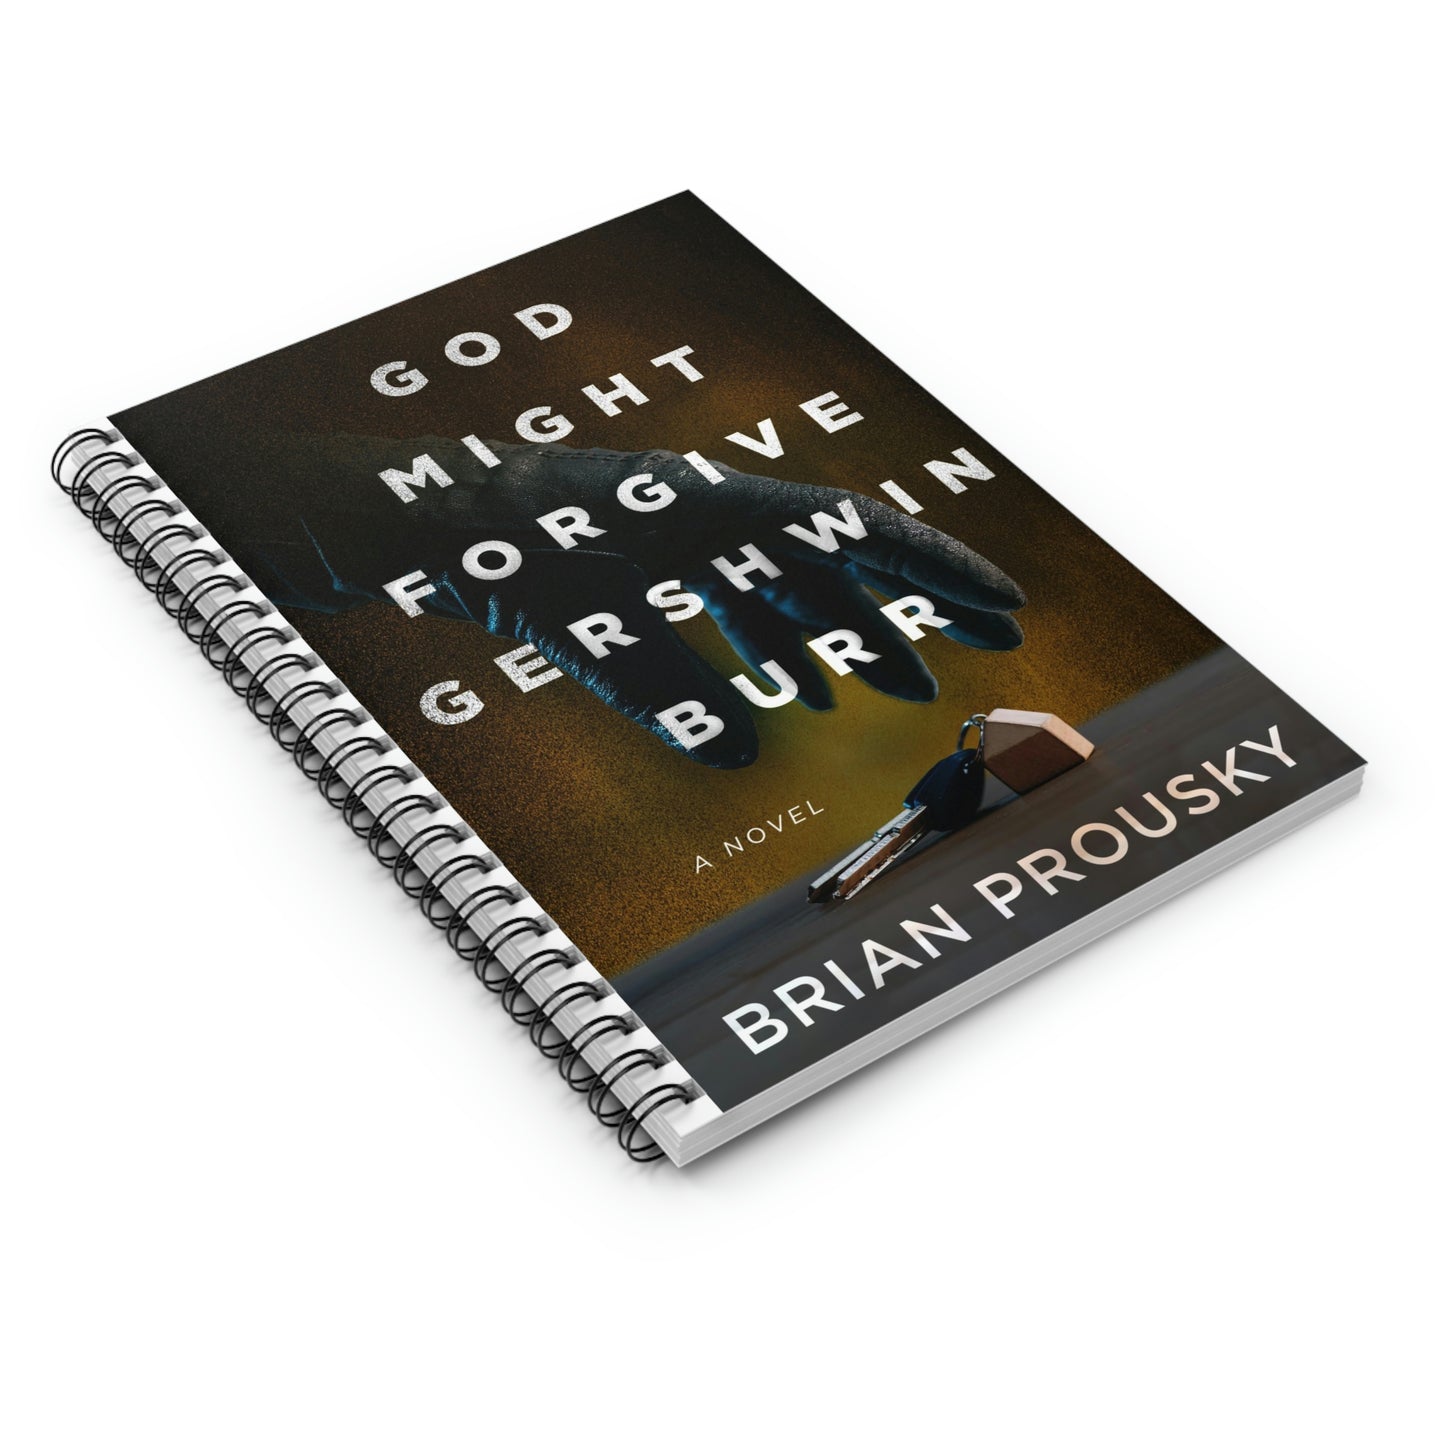 God Might Forgive Gershwin Burr - Spiral Notebook